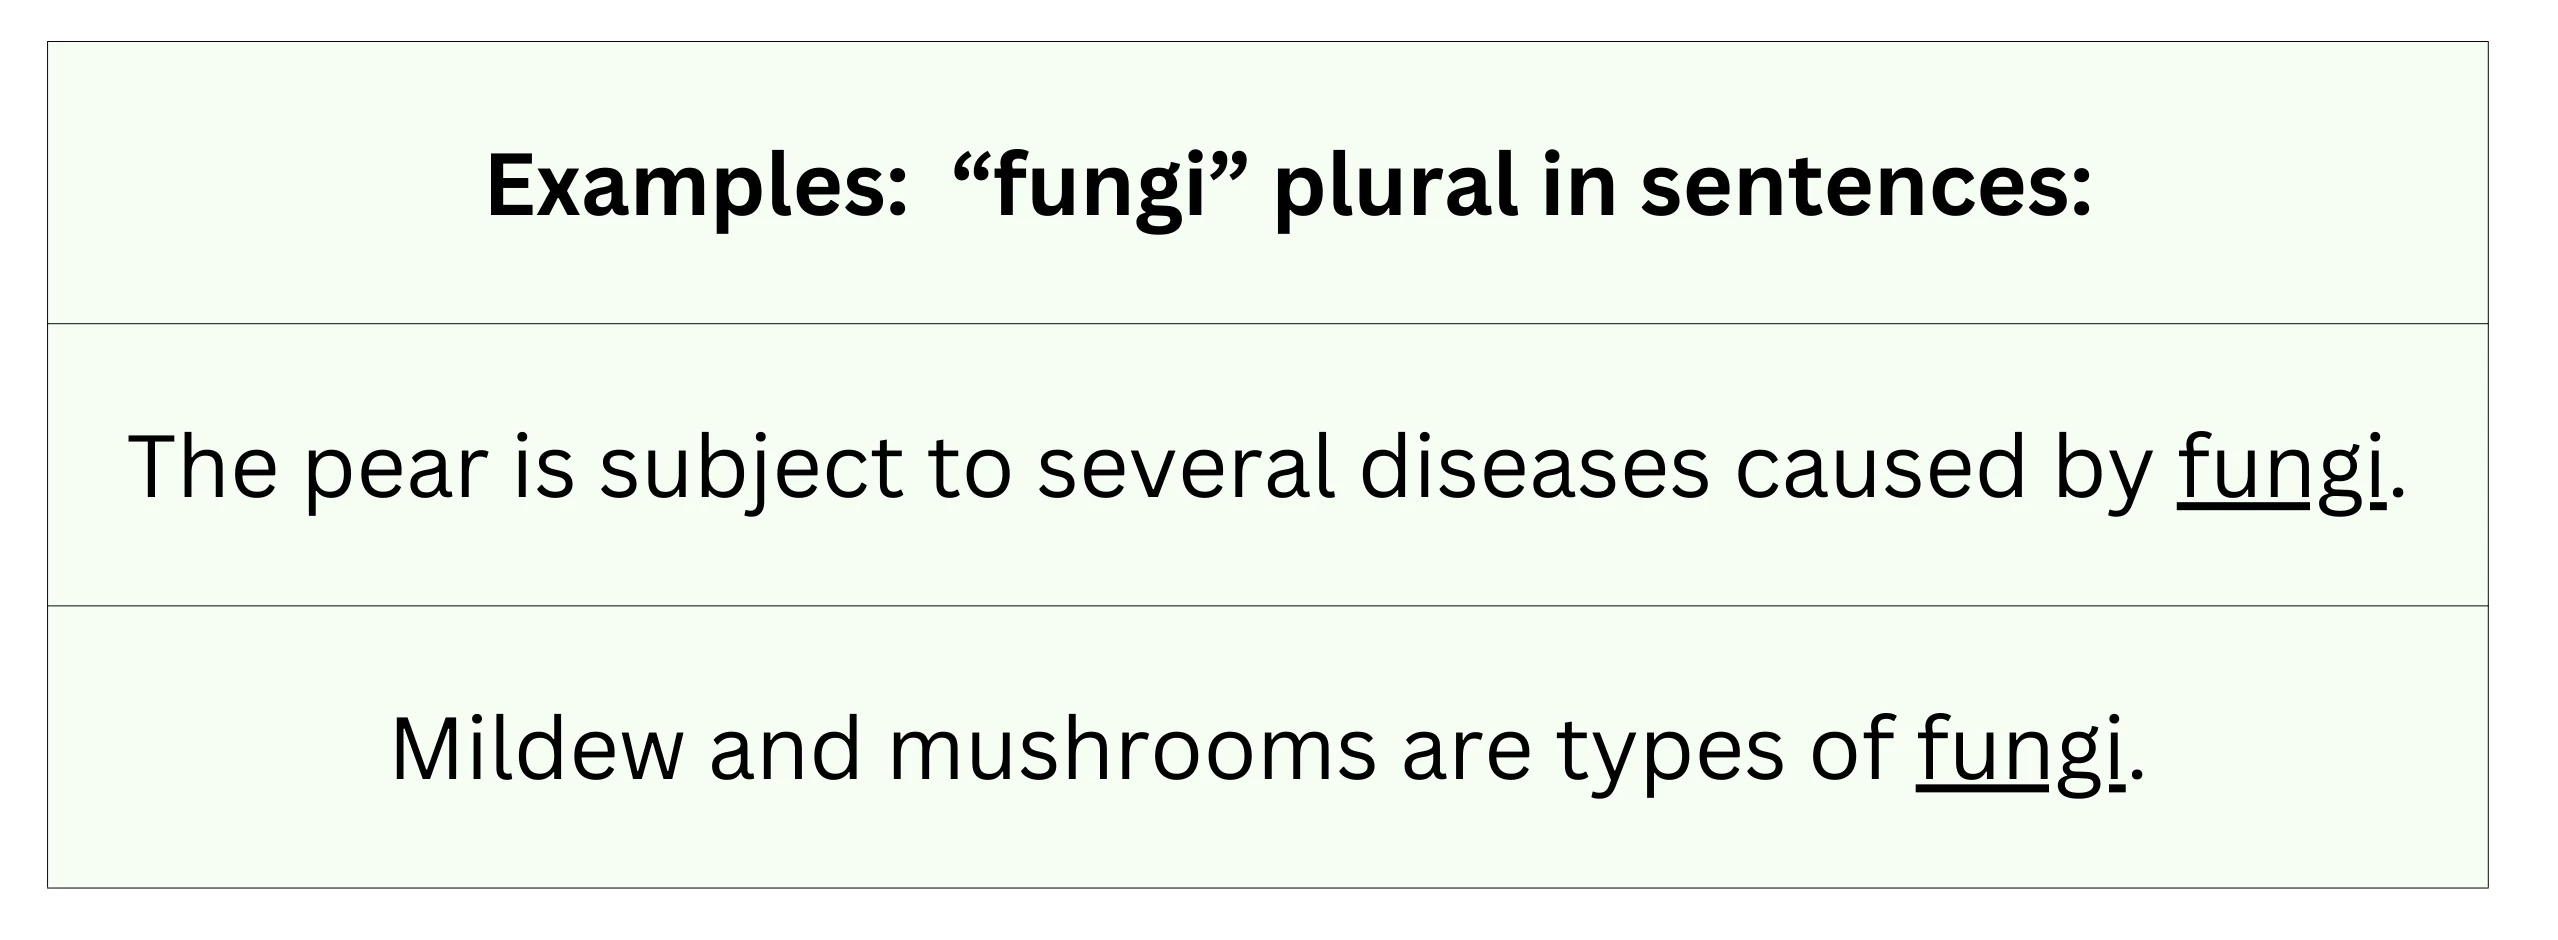 "Fungi" plural in sentence examples.